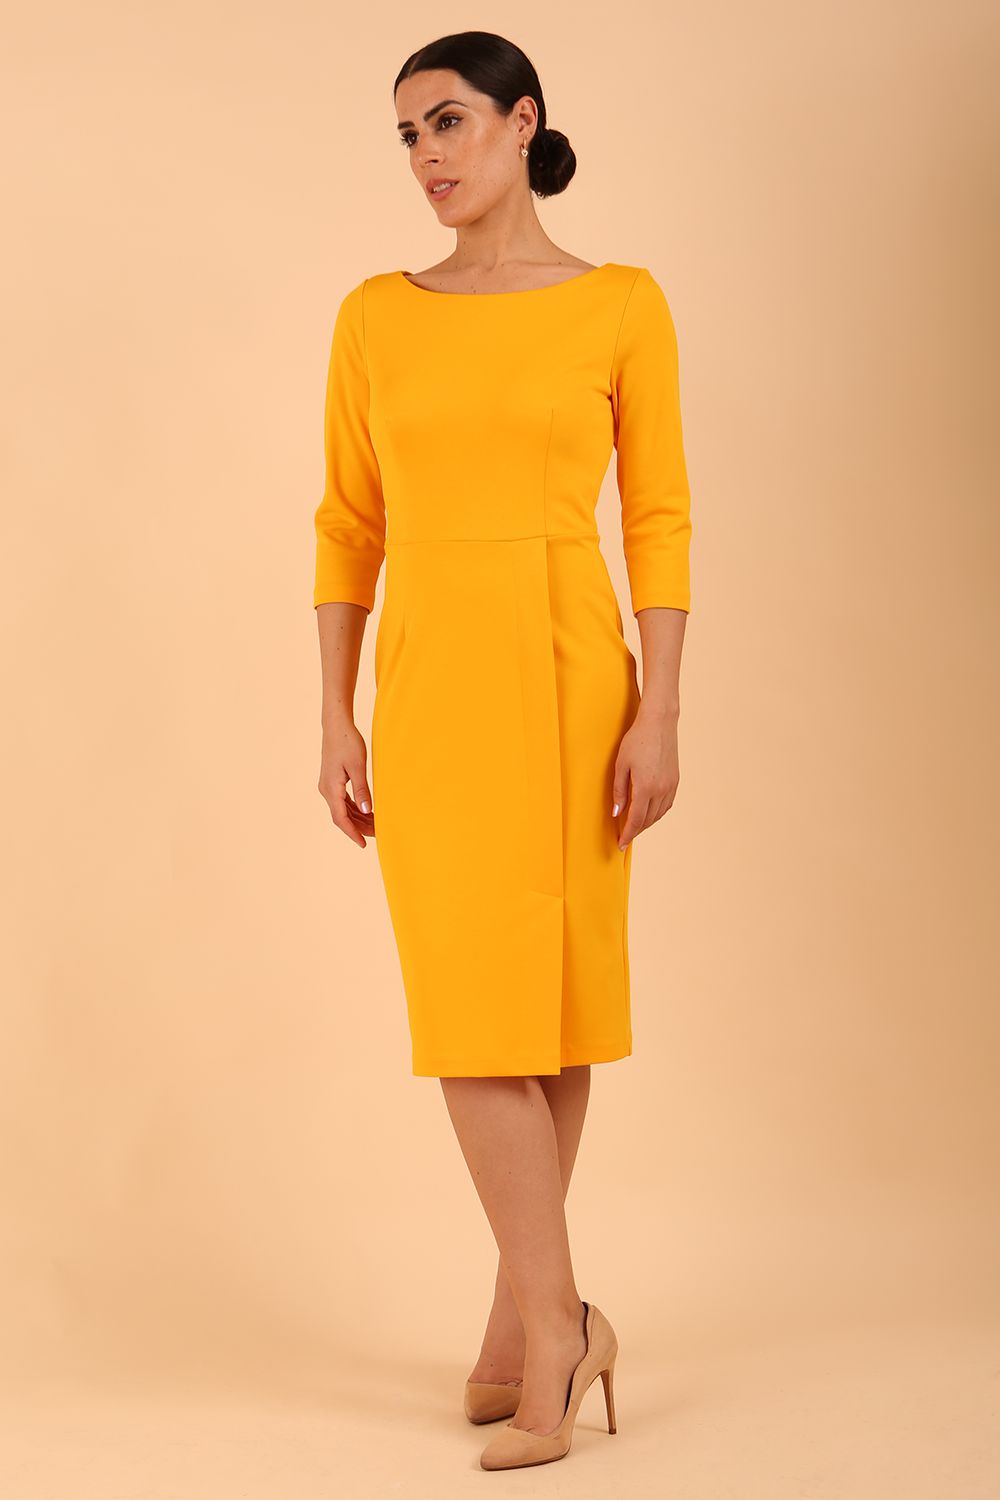 Model wearing diva catwalk Kinga 3/4 Sleeve pencil skirt dress yellow front